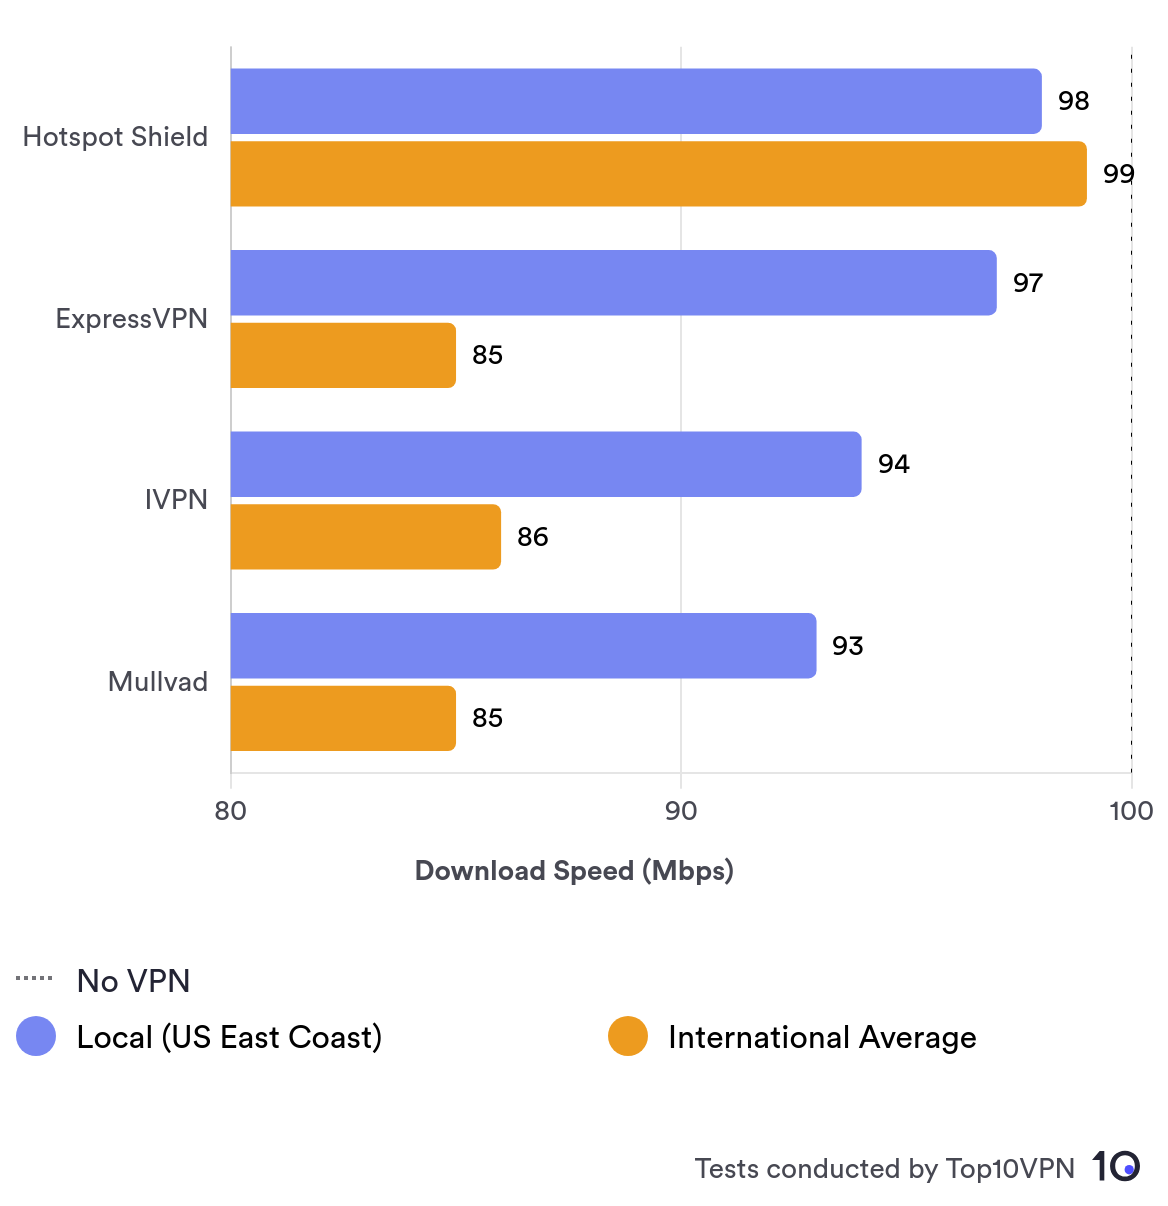 Bar chart comparing top local and average international speeds between four popular VPNs: Hotspot Shield, ExpressVPN, IVPN, and Mullvad. Their speeds descend in that order. 